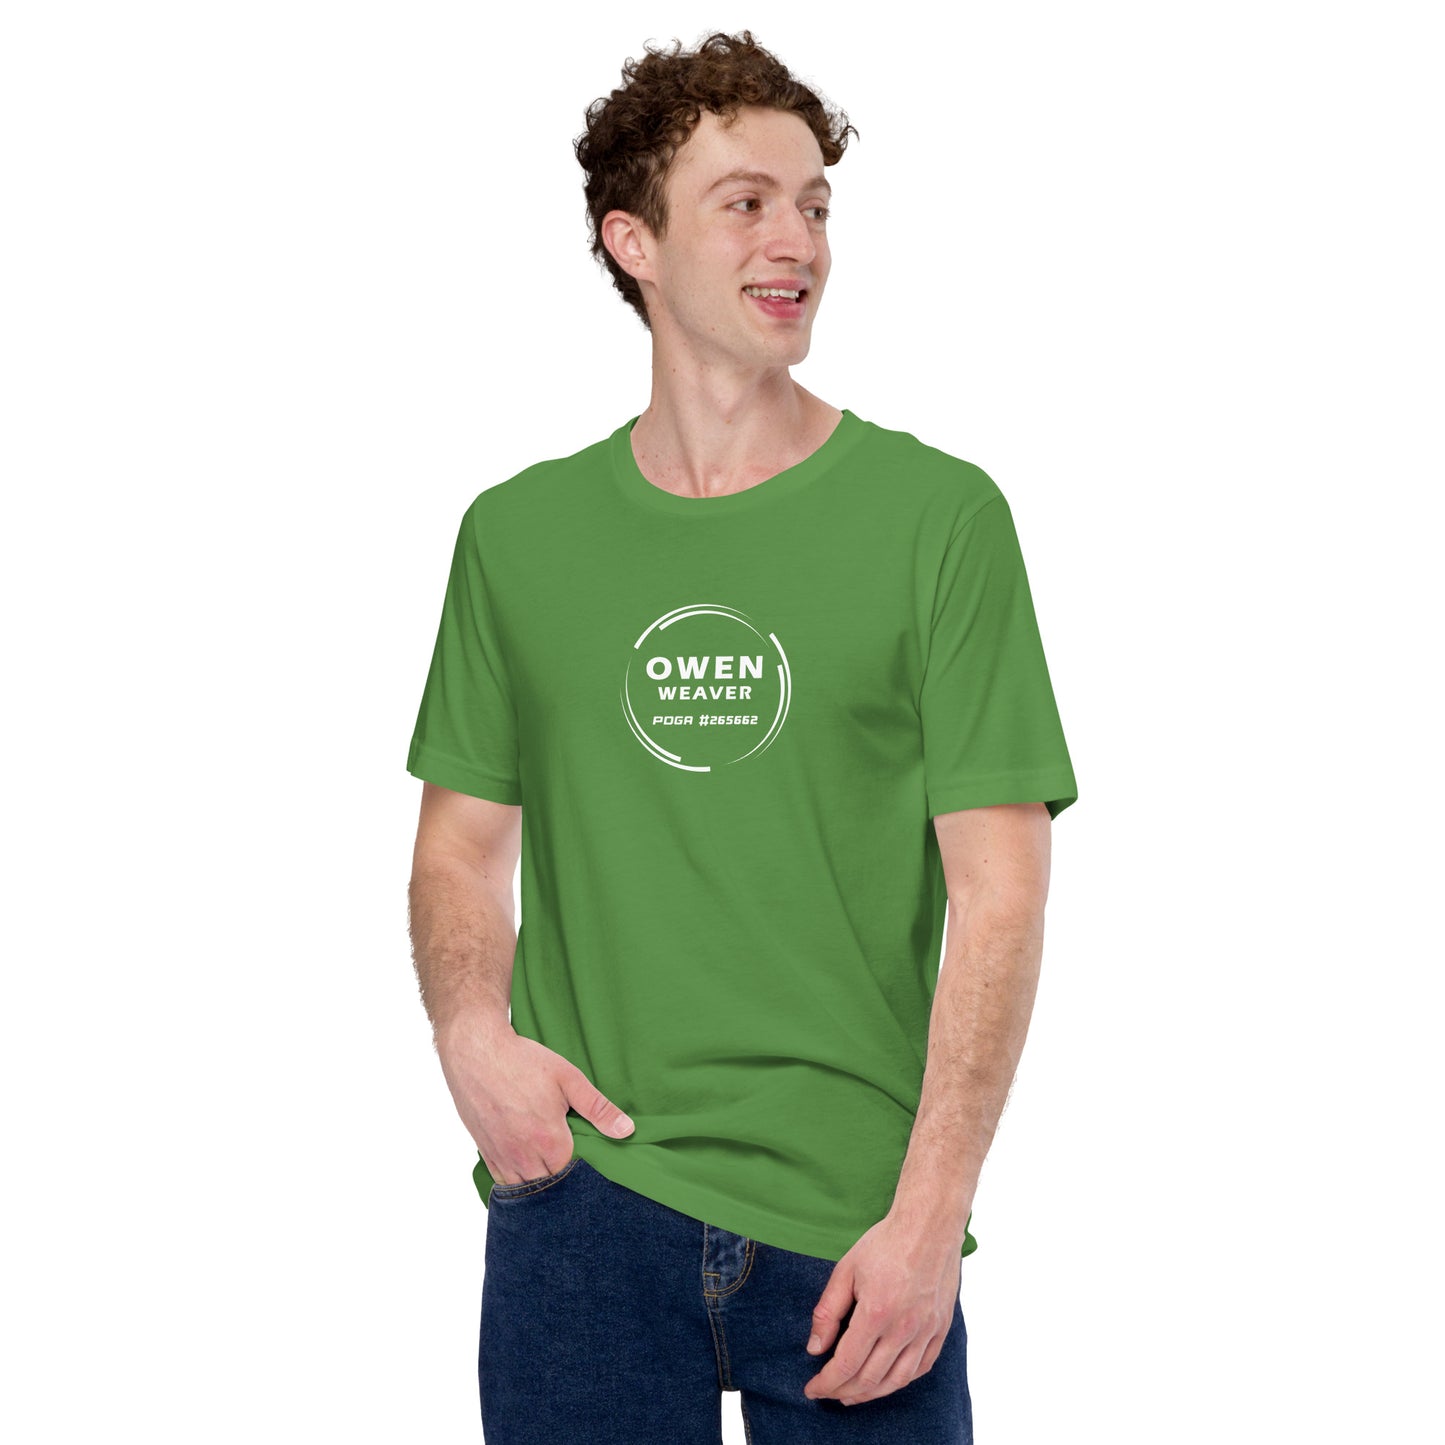 Unisex T-shirt